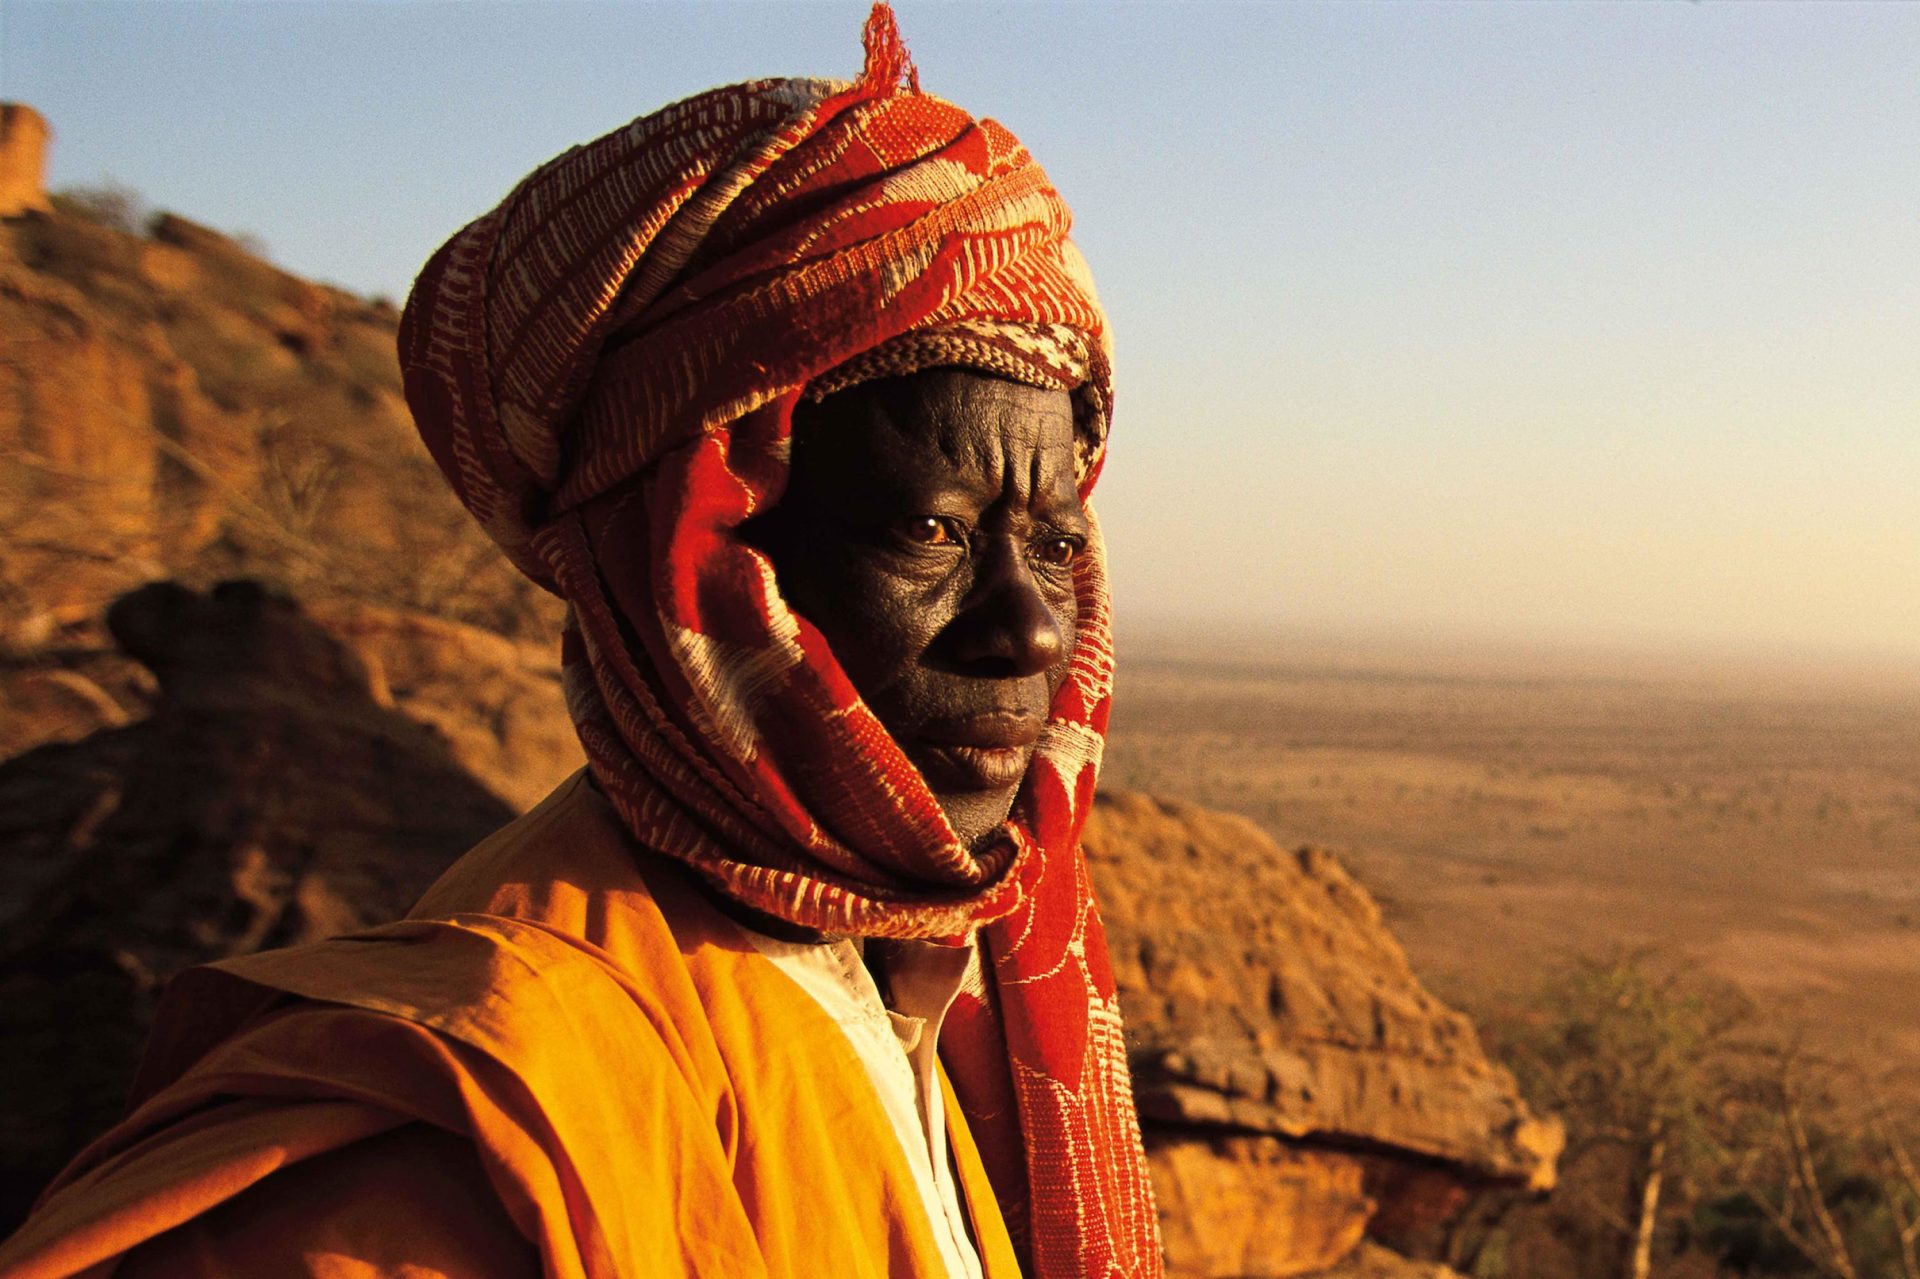 A Dogon elder from the cliffs of the Bandiagara escarpment in Mali. Photo by Wade Davis